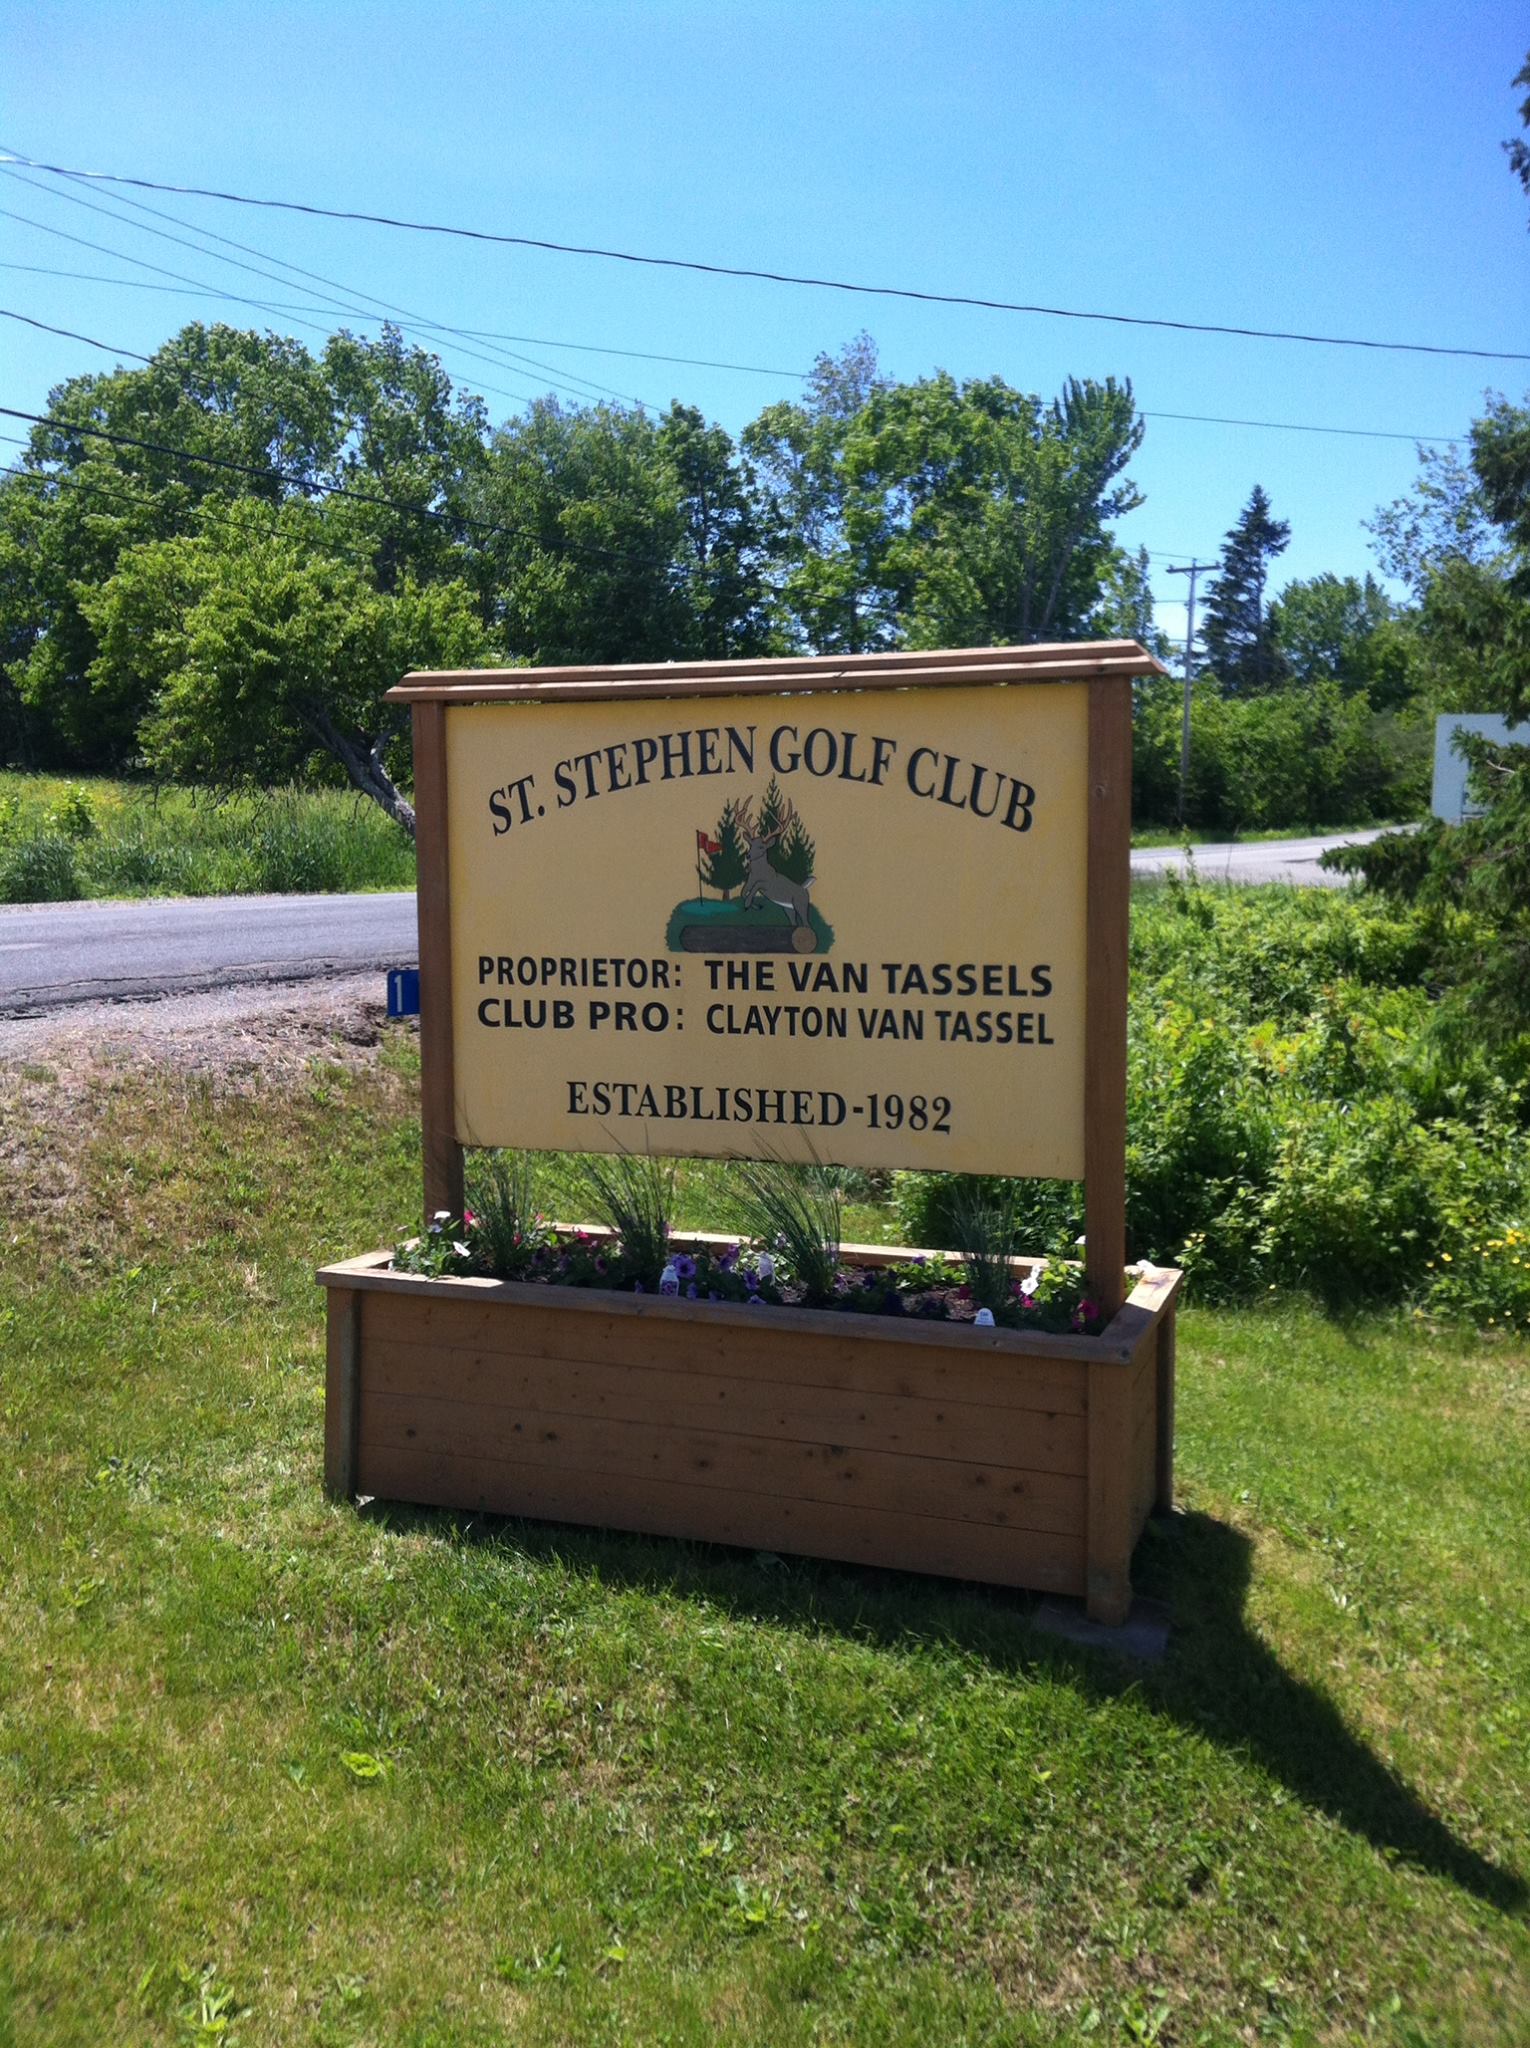 St Stephen Golf Club